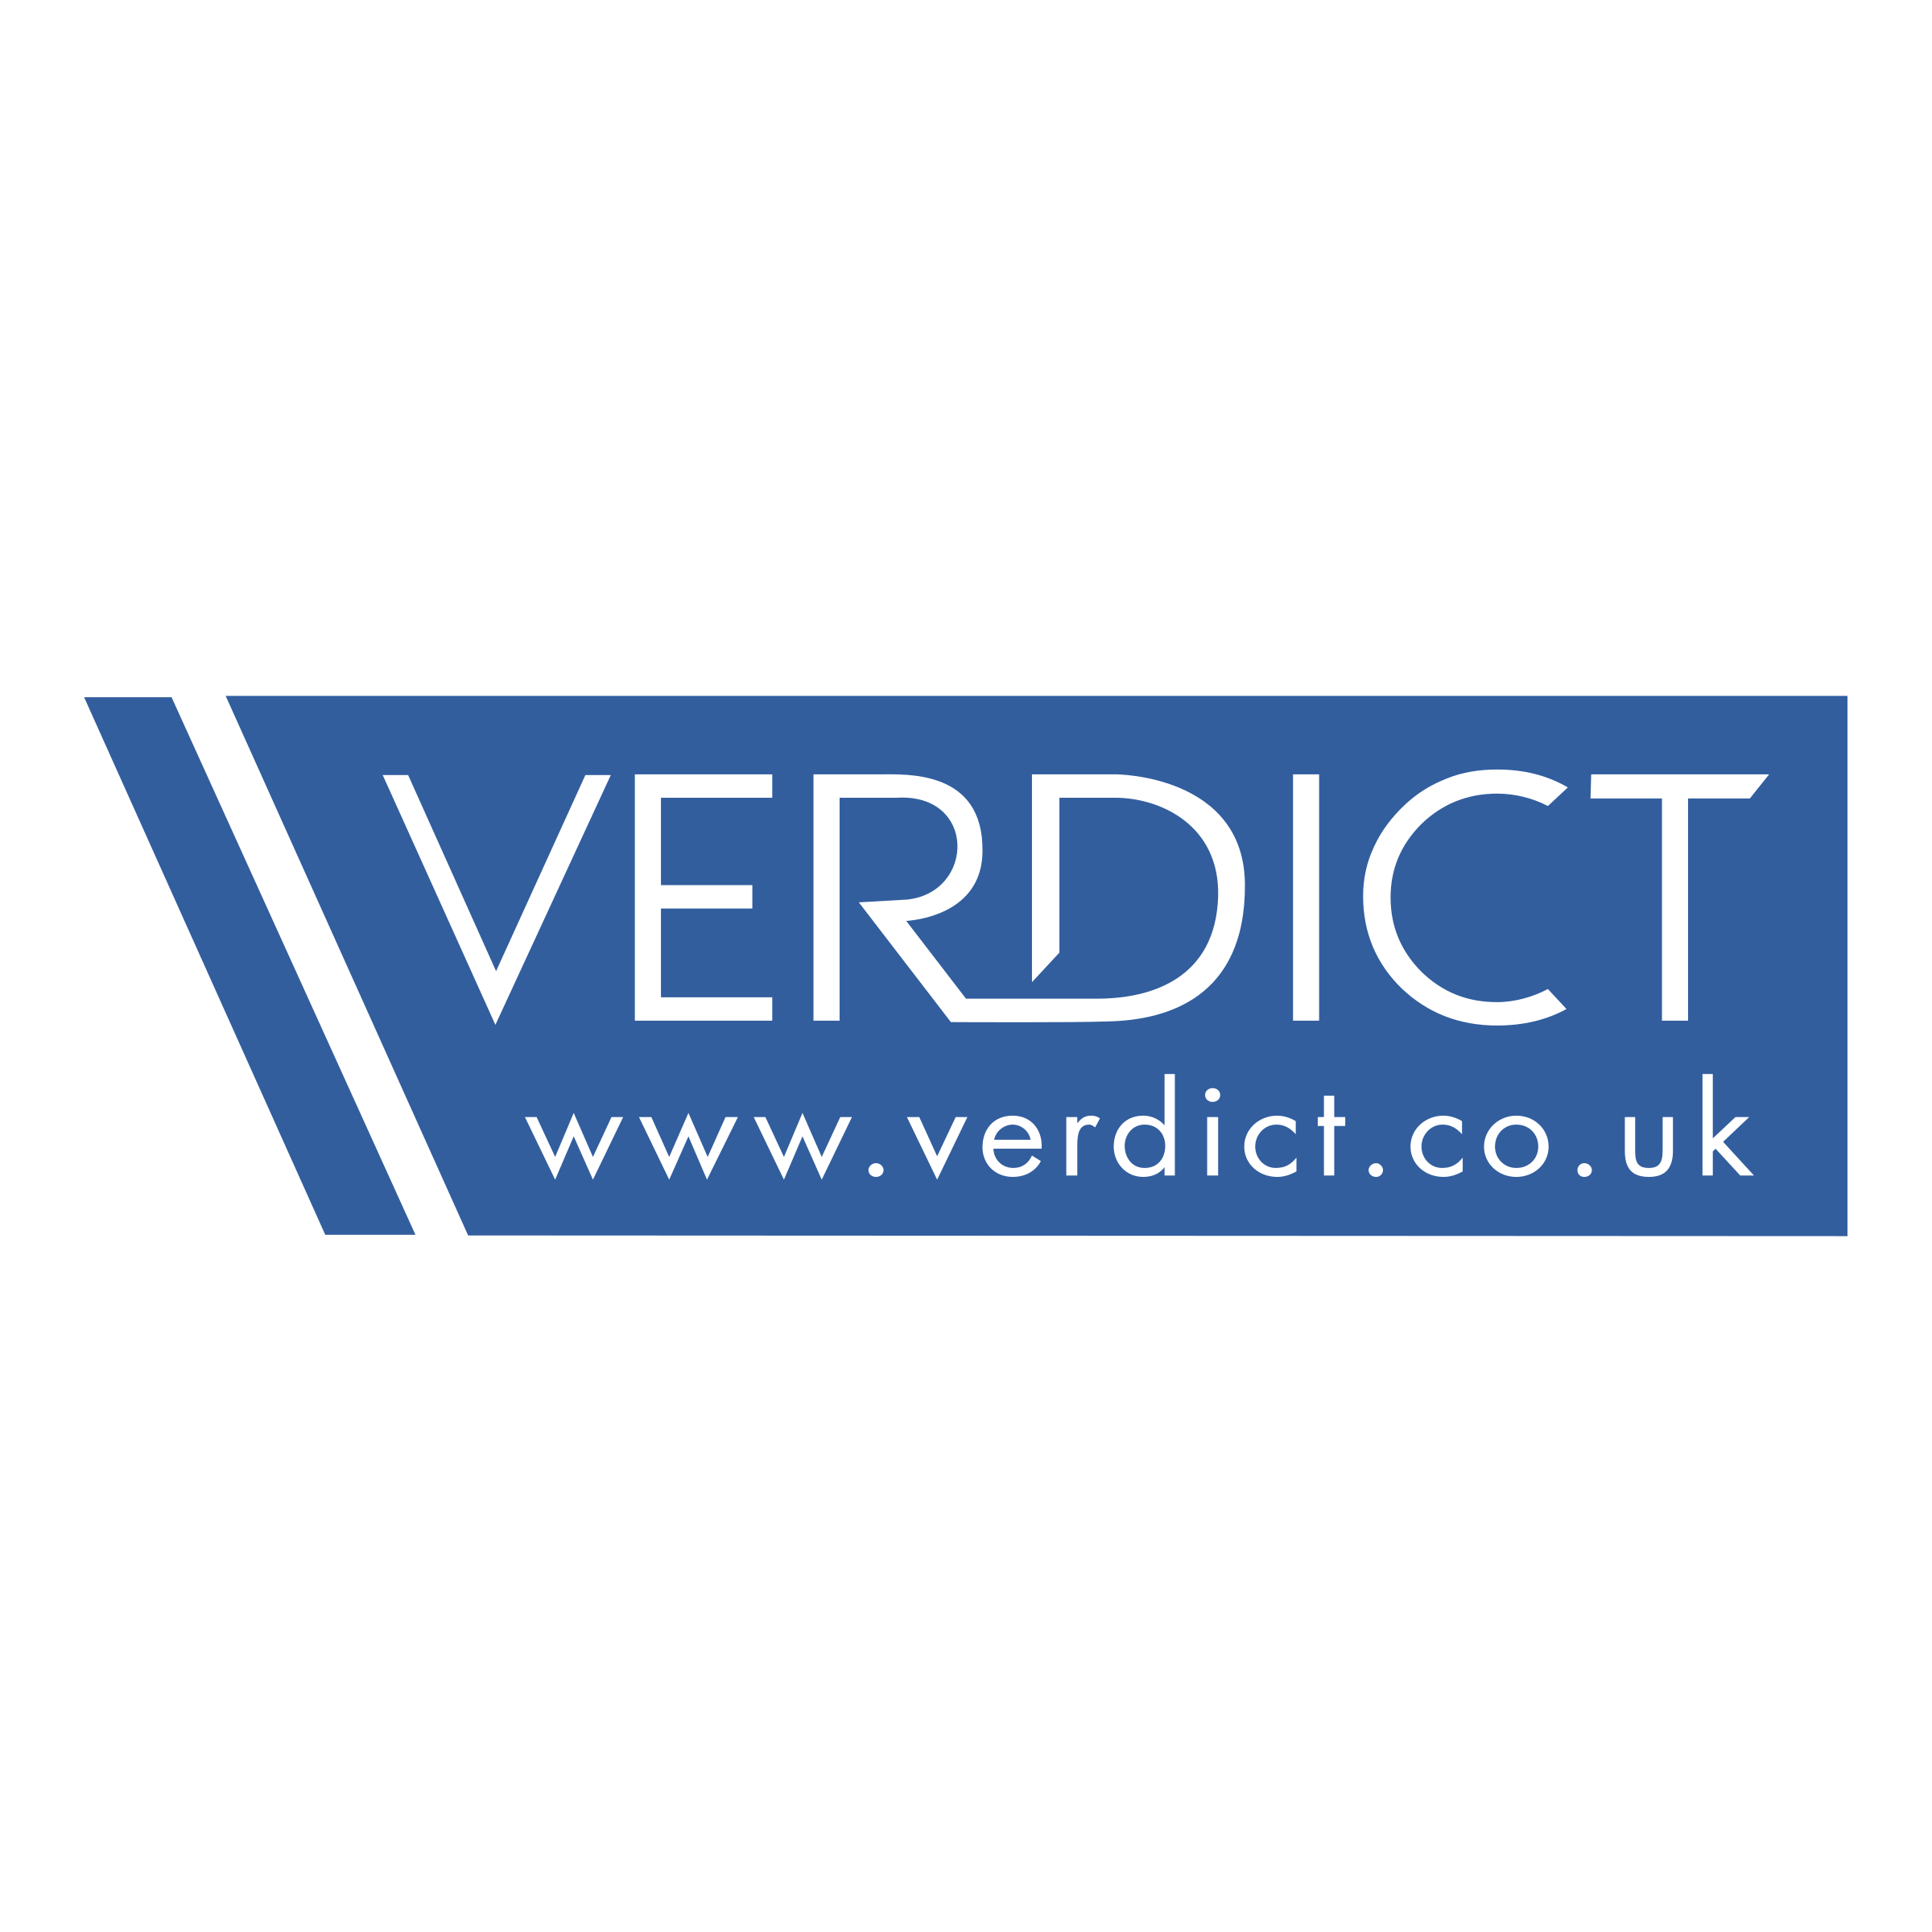 Verdict Logo PNG Transparent & SVG Vector - Freebie Supply